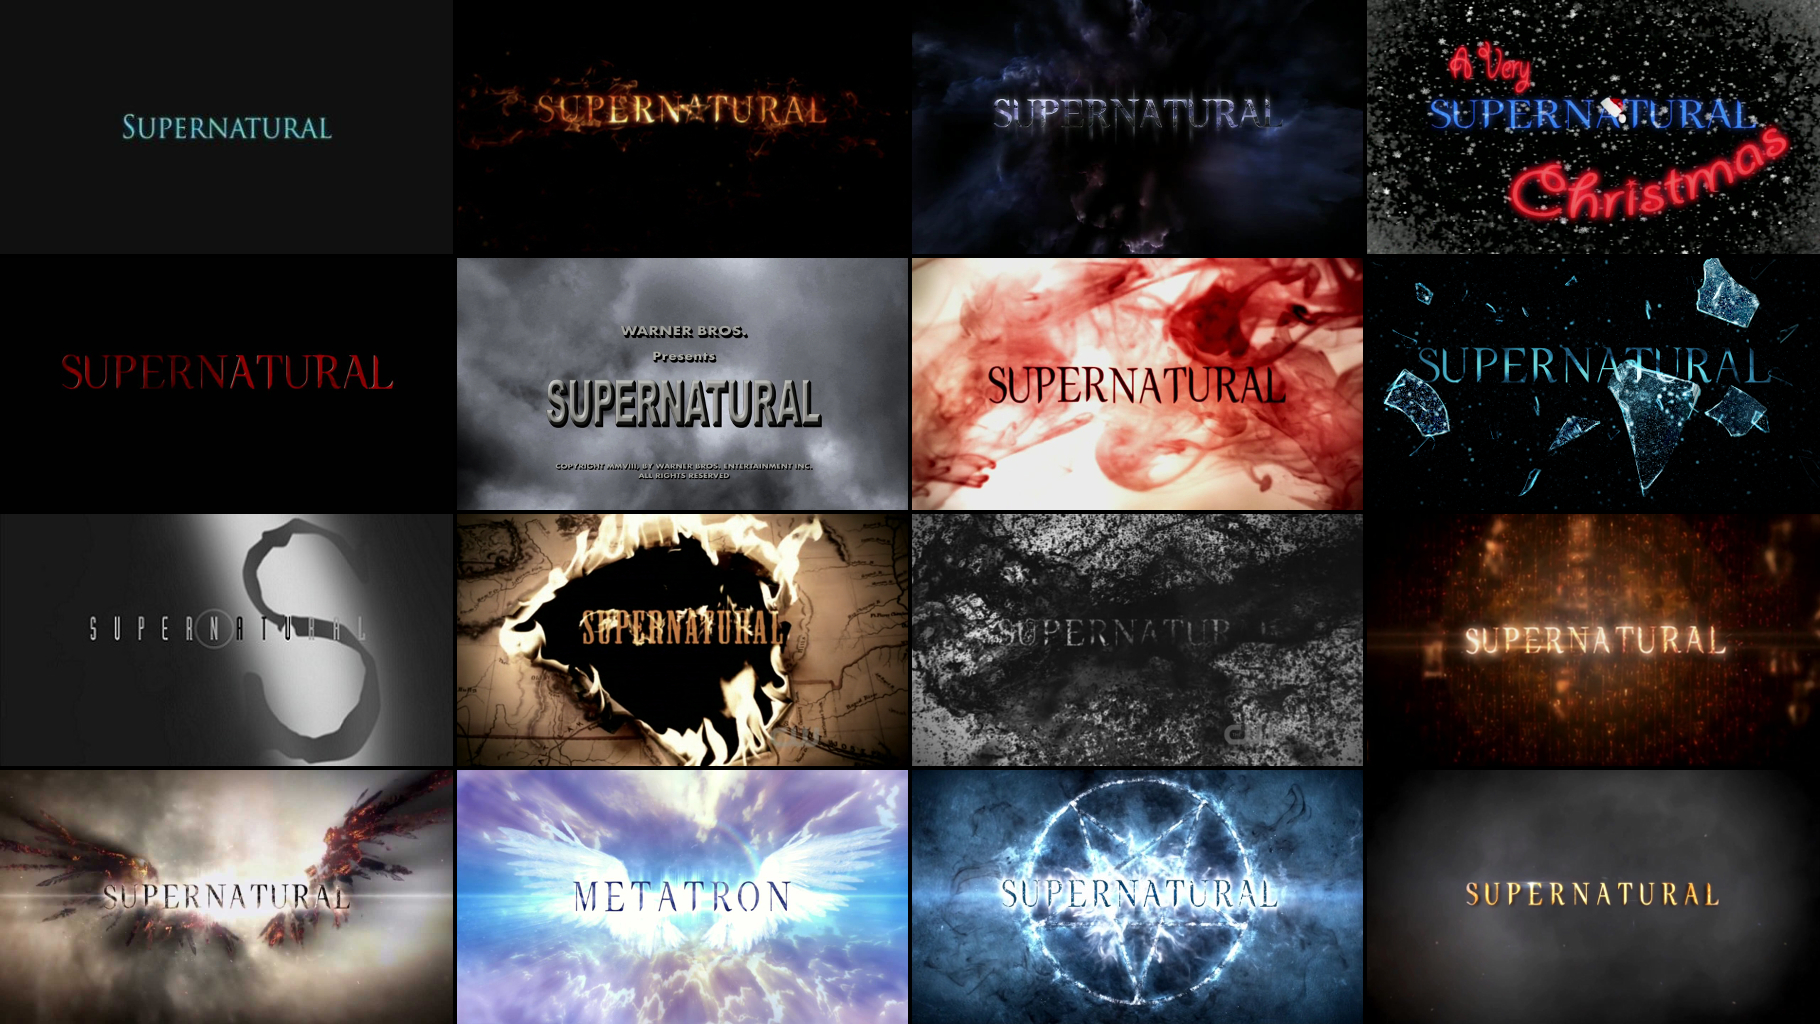 tv show, supernatural, supernatural (tv show)